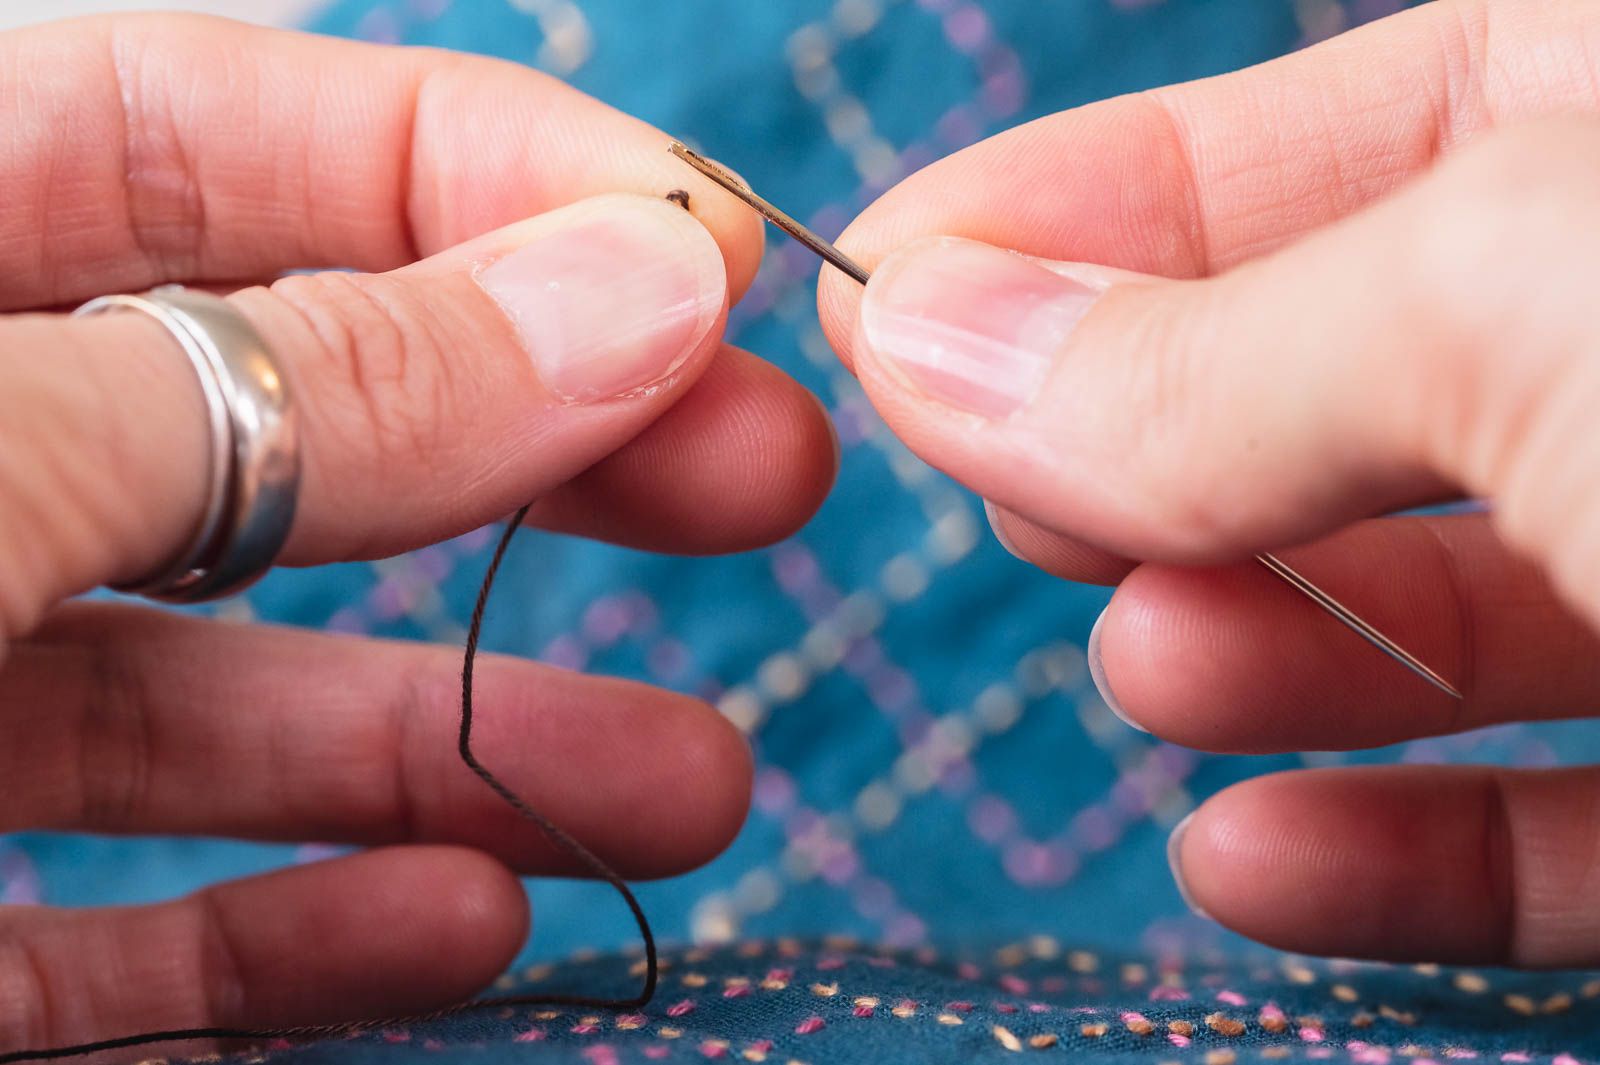 Two hands threading a thread loop through a needle's eye